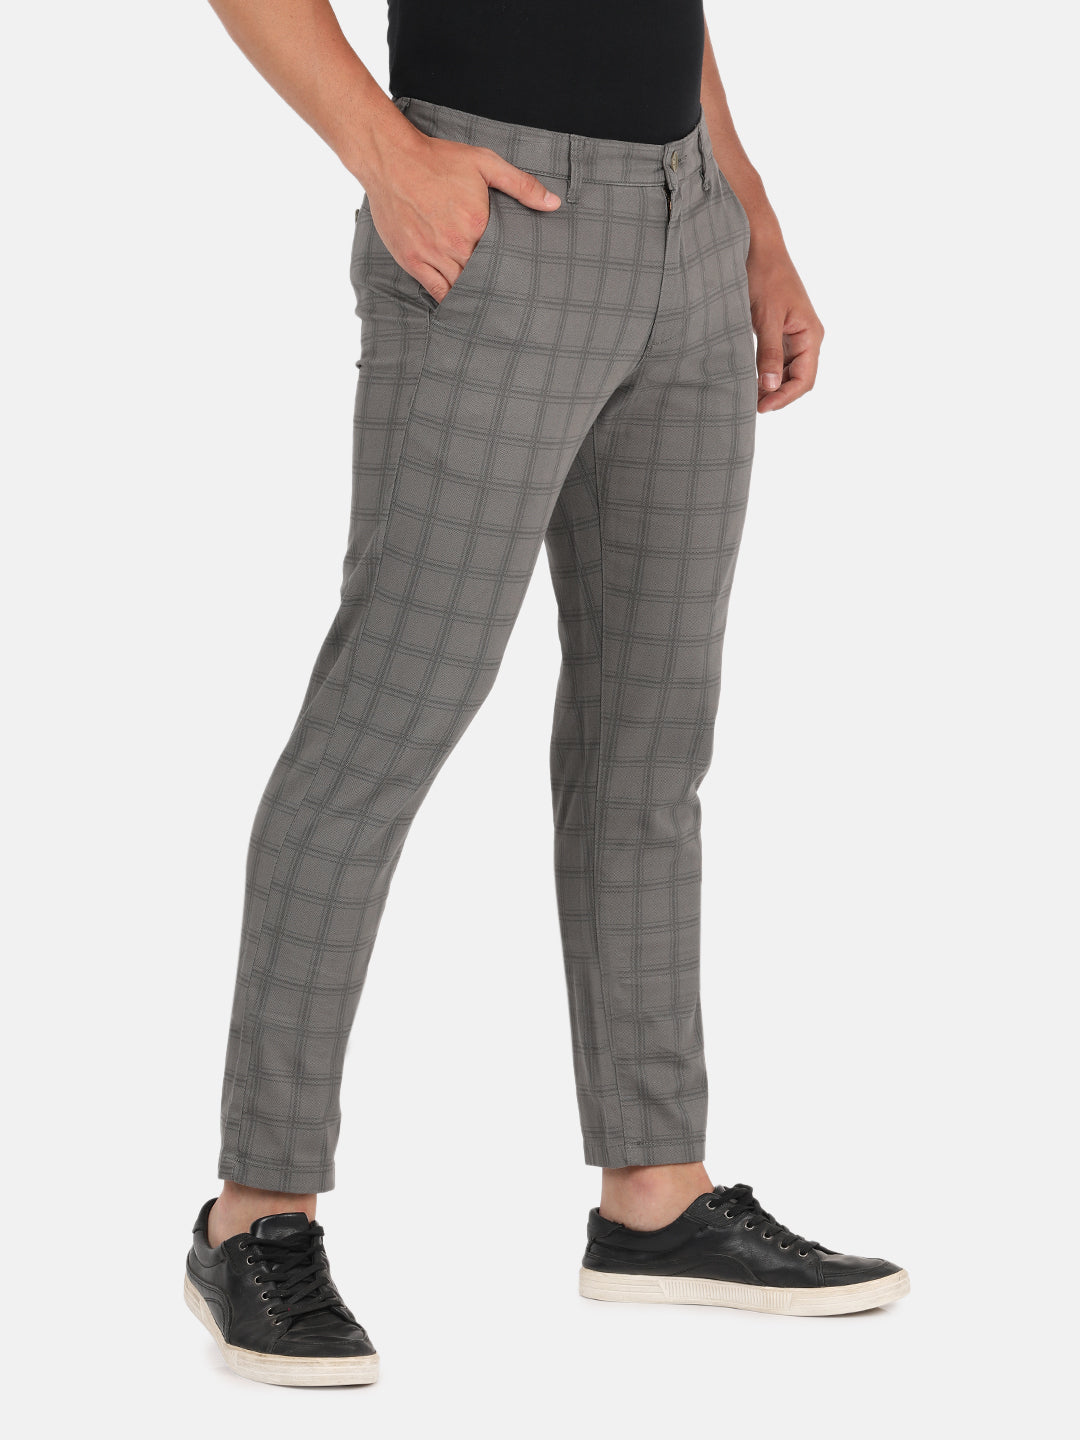 Crocodile Casual Slim Fit Printed Grey Trousers for Men